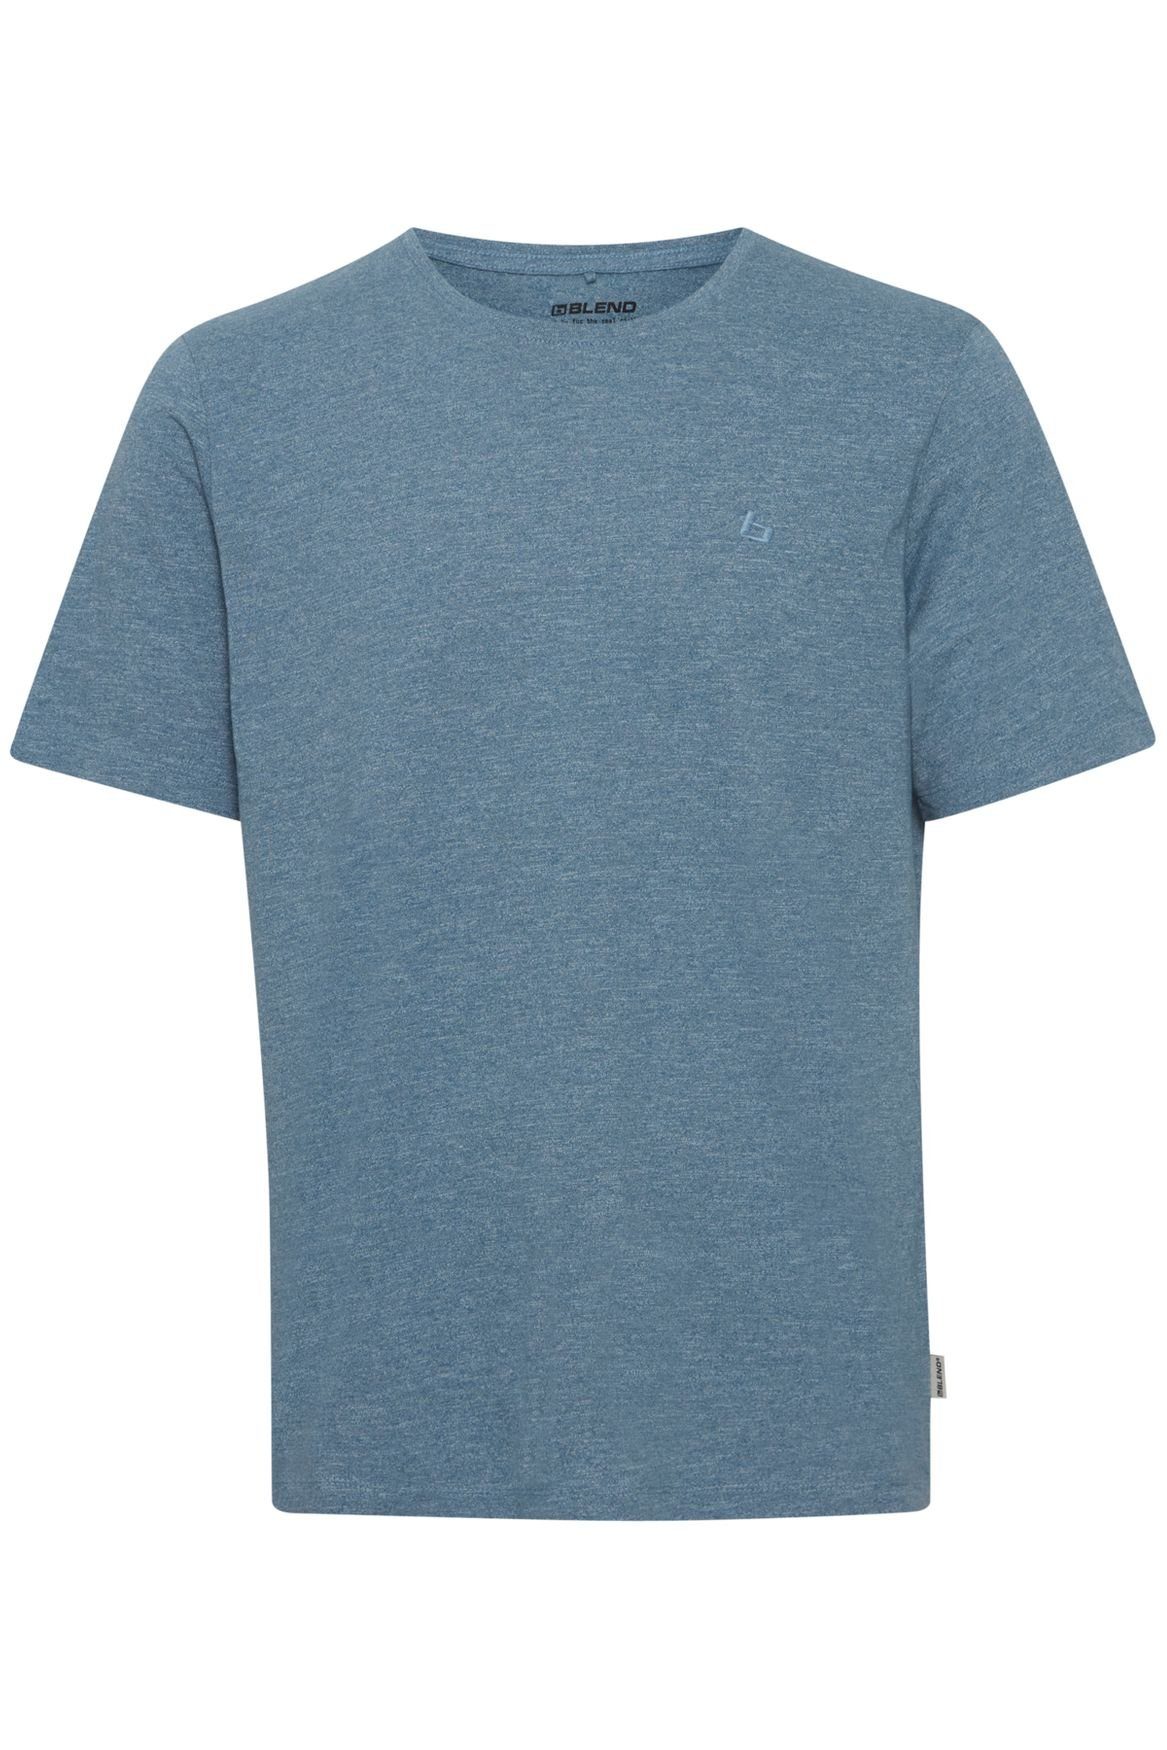 Blau Shirt Kurzarm T-Shirt Stretch Rundhals BHWilton 5030 in Blend T-Shirt